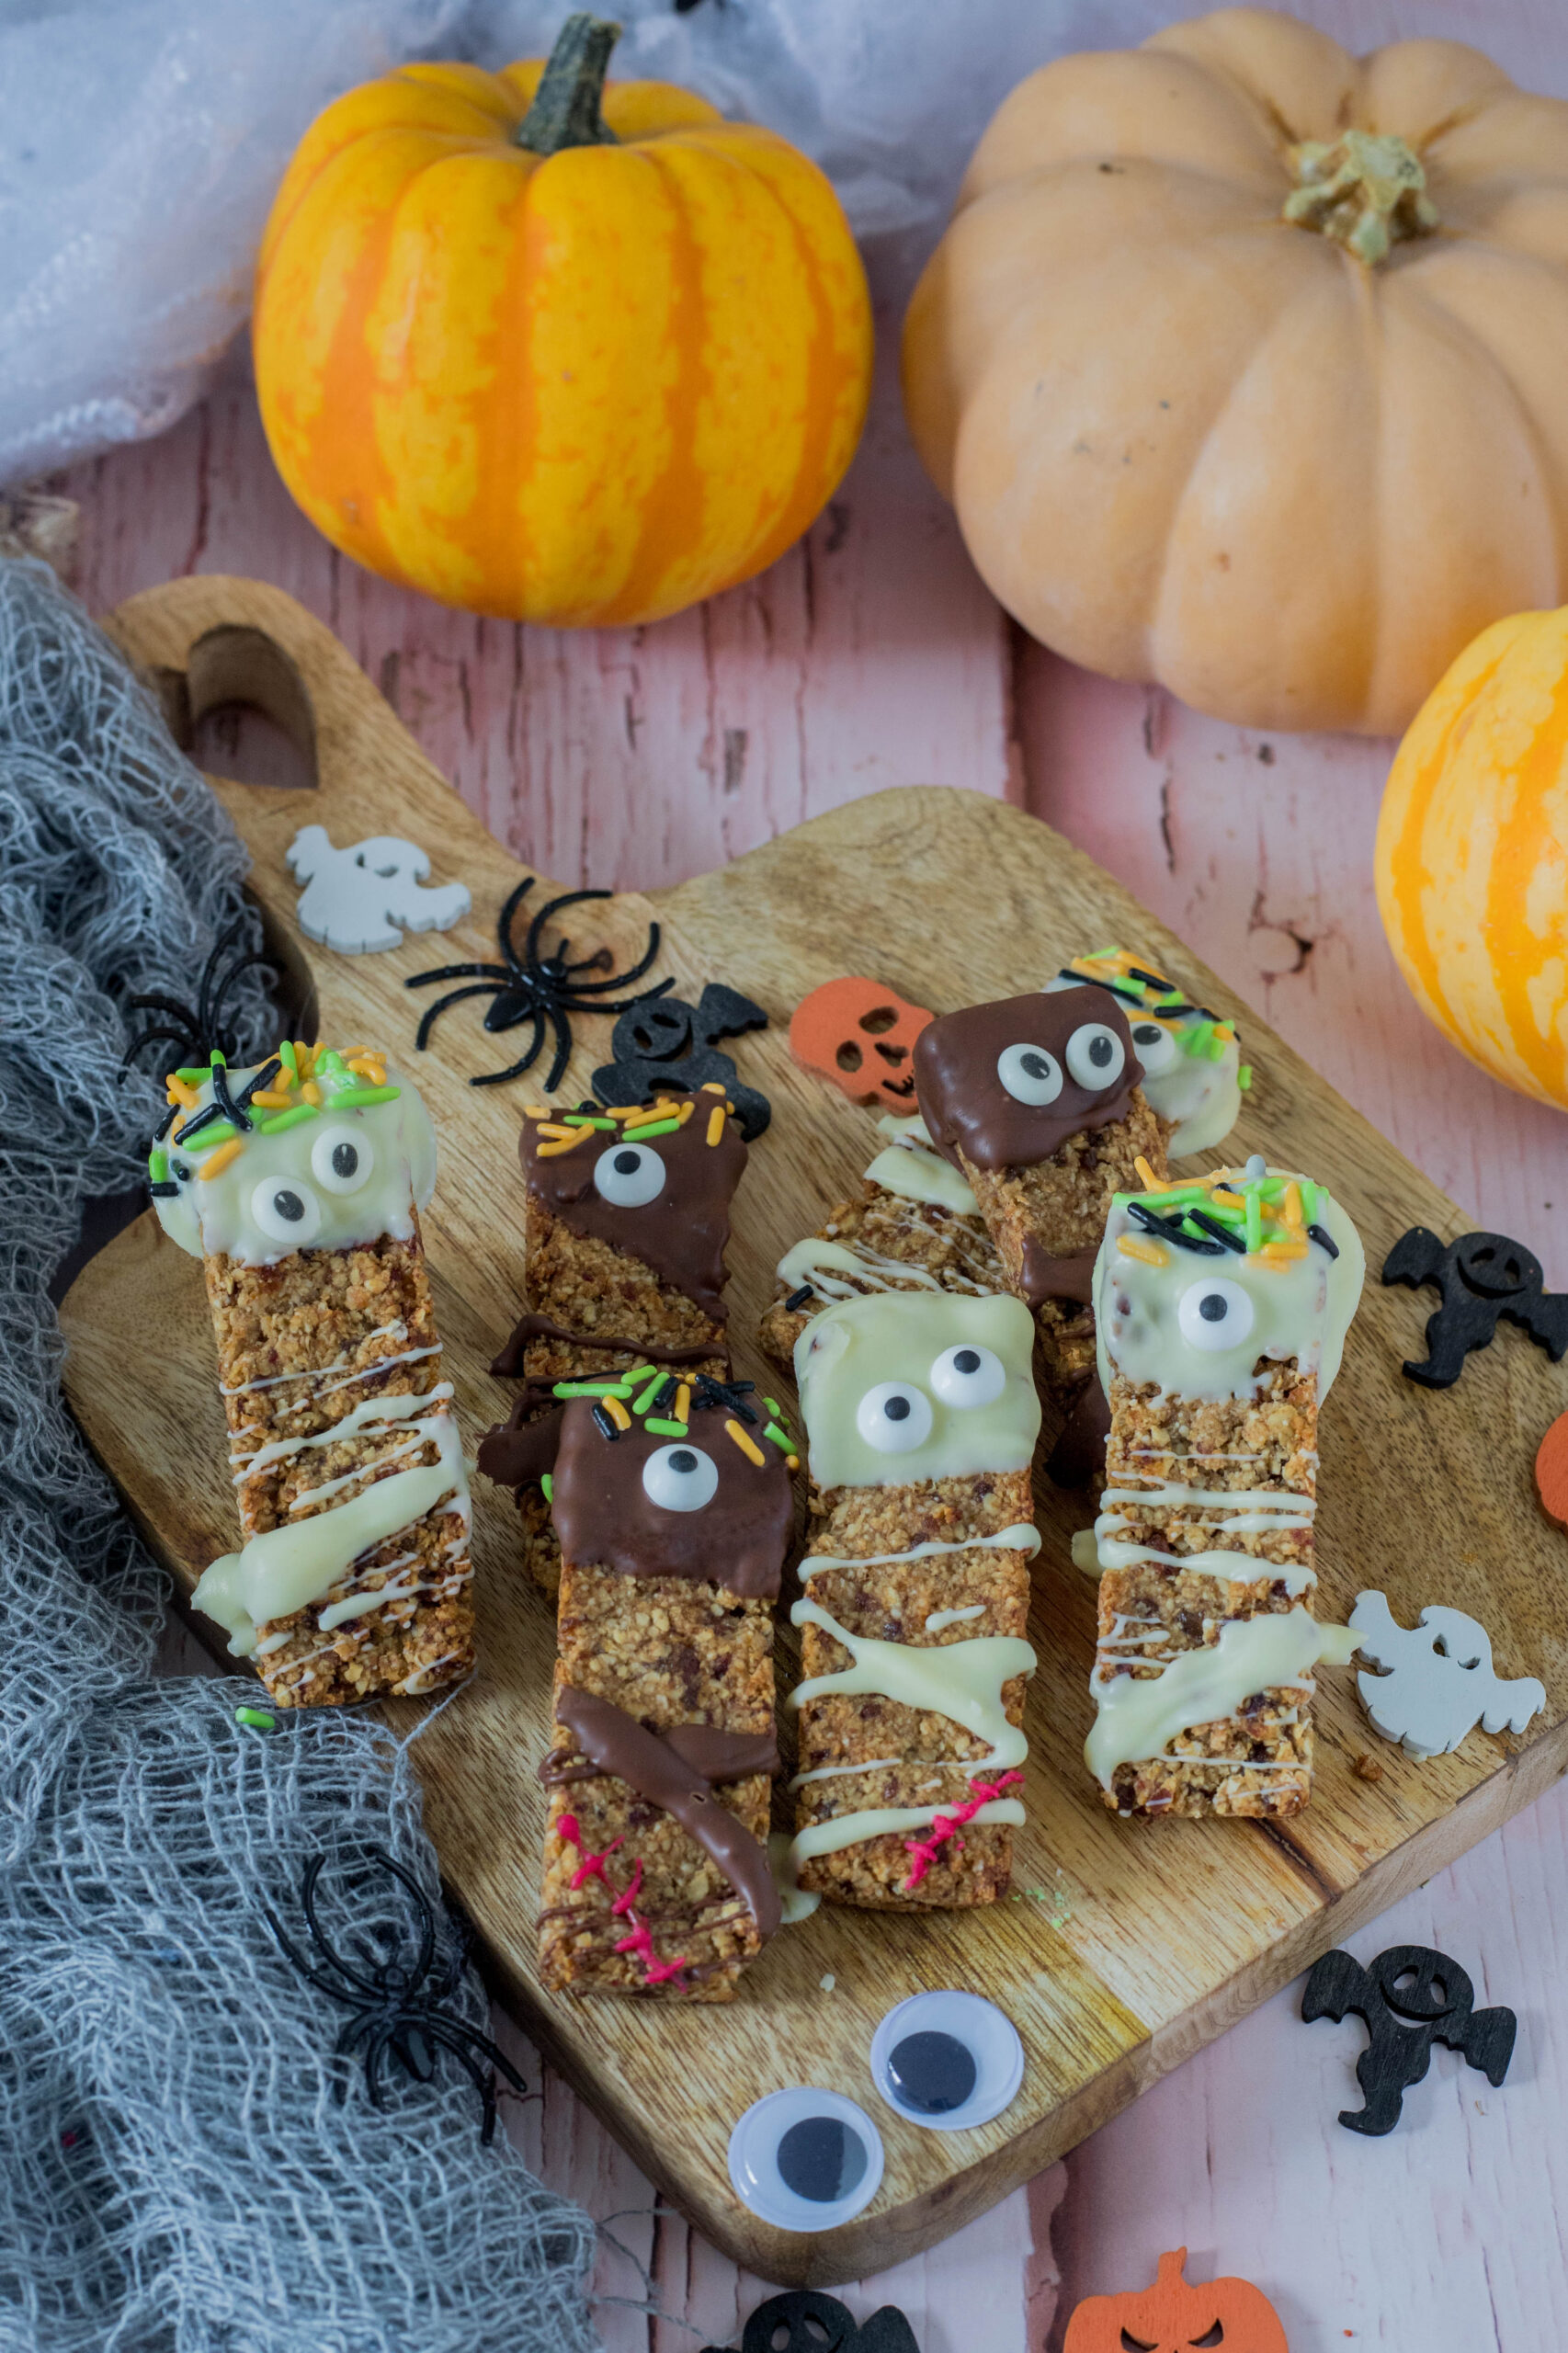 Gruselige Kinder-Snackidee für Halloween: Monster-Müsliriegel